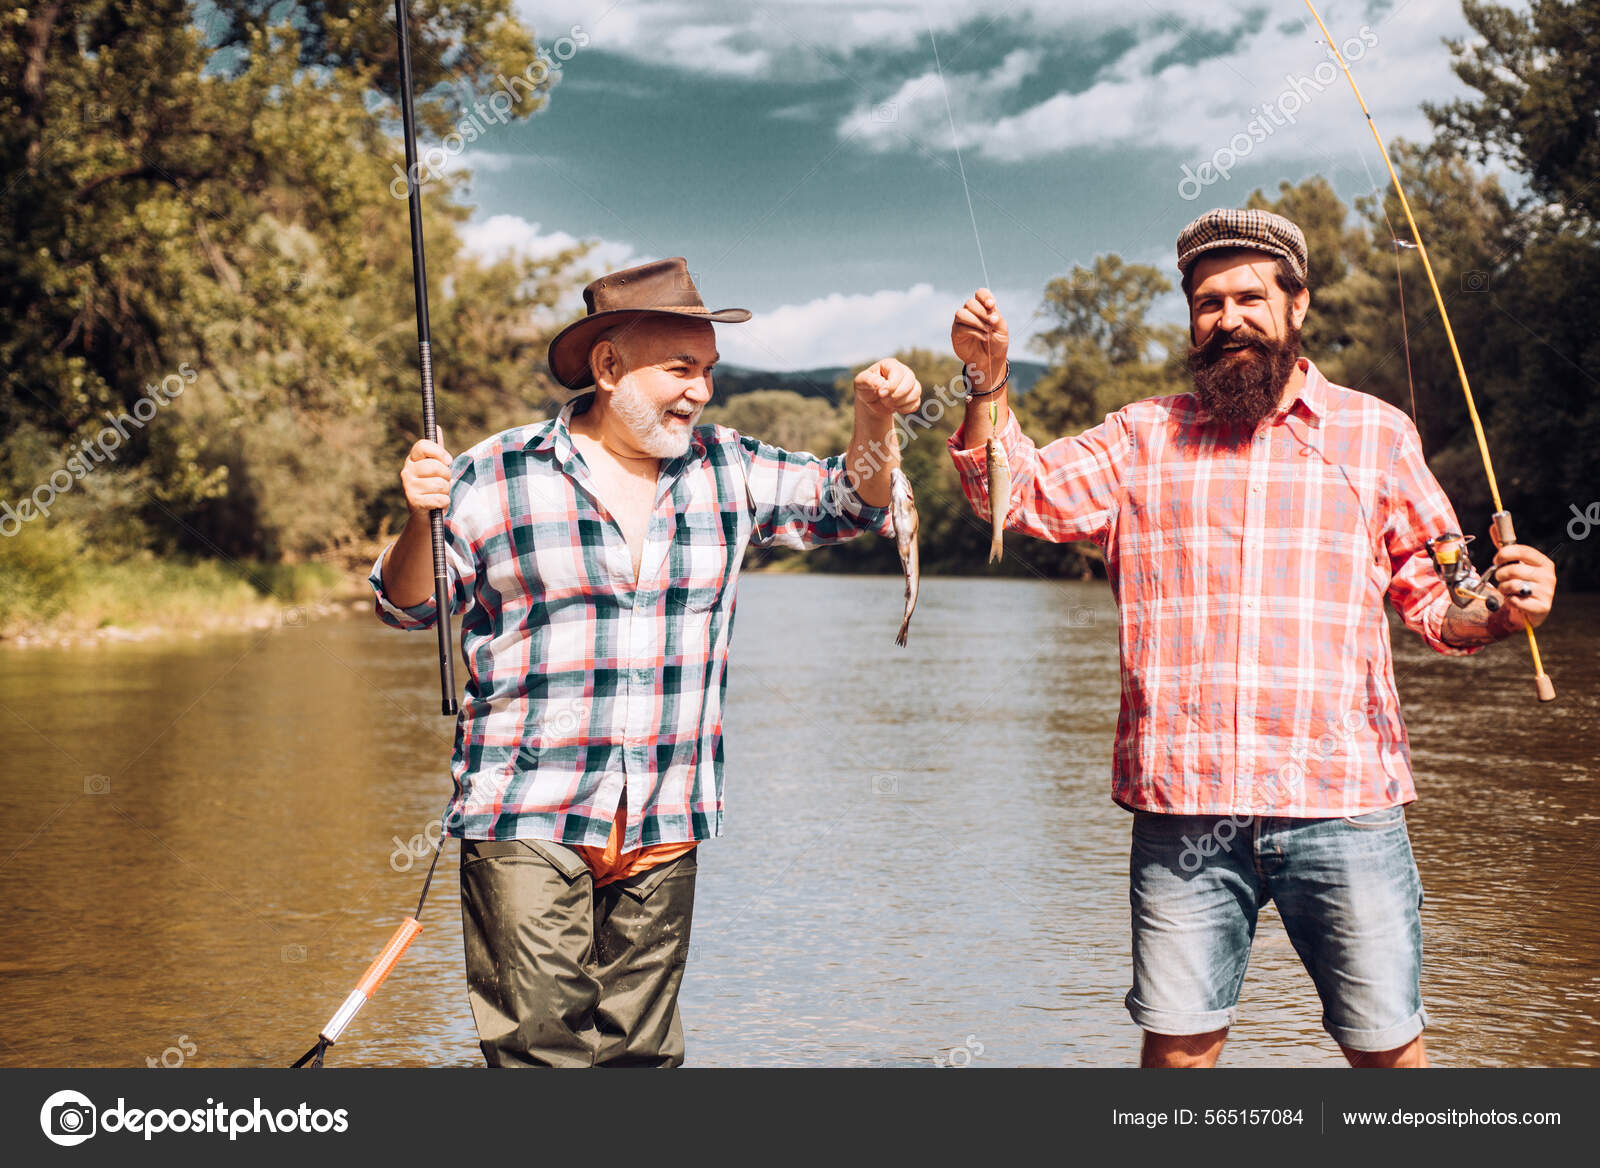 https://st.depositphotos.com/3584053/56515/i/1600/depositphotos_565157084-stock-photo-two-men-friends-fisherman-fishing.jpg